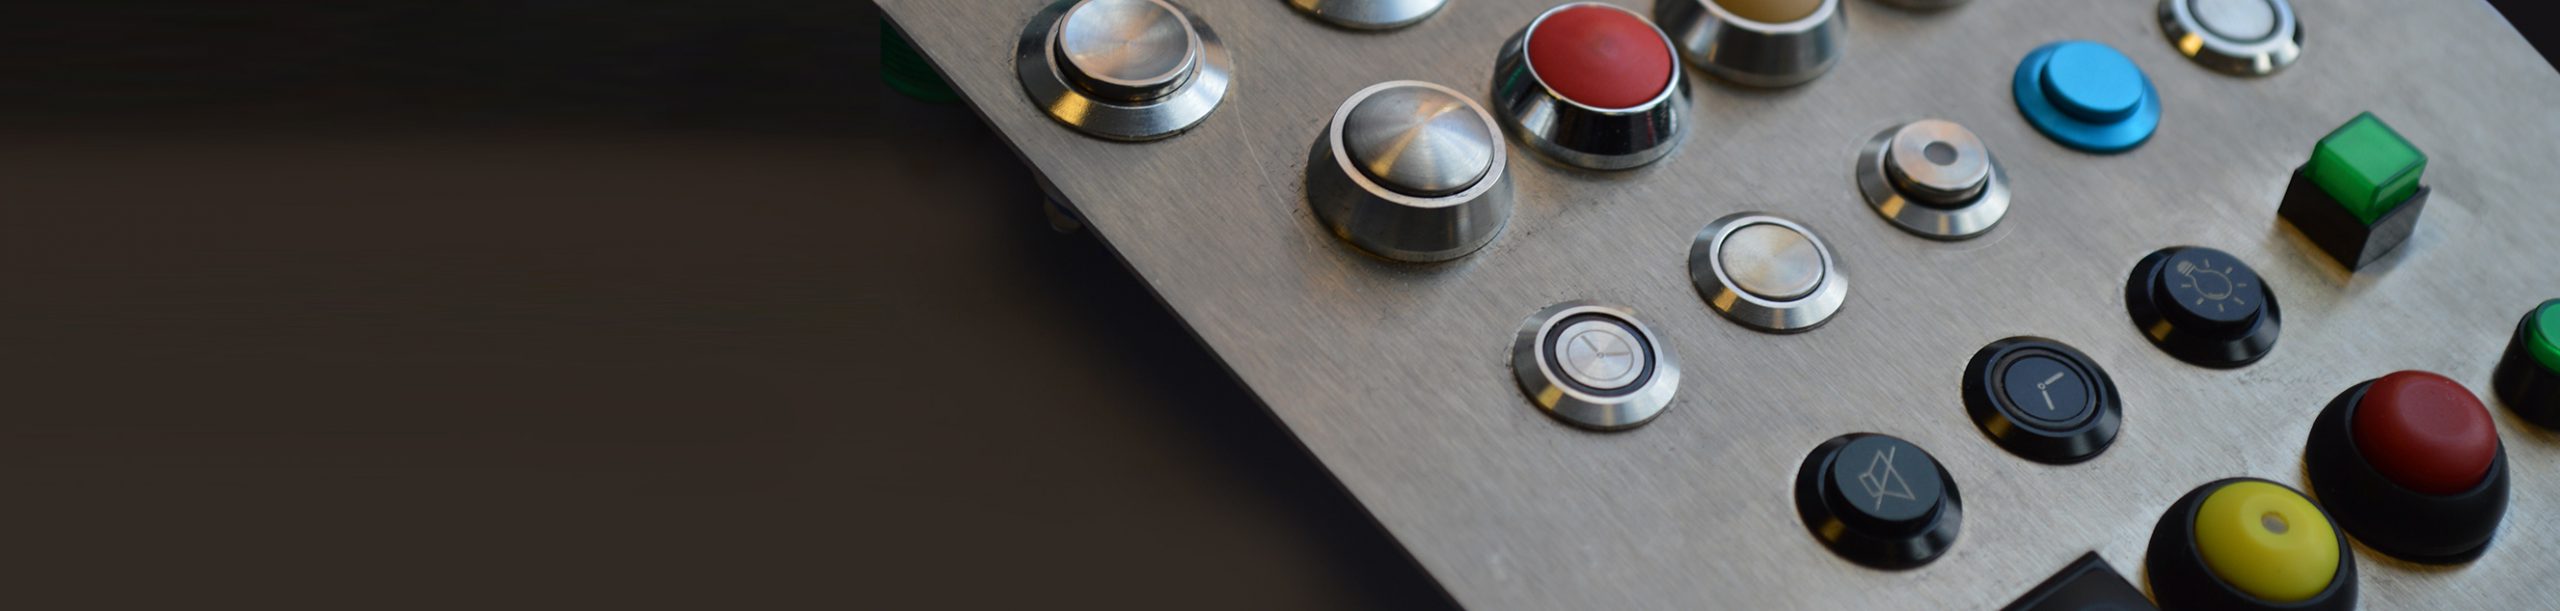 panel mount push button switches, rjs electronics ltd